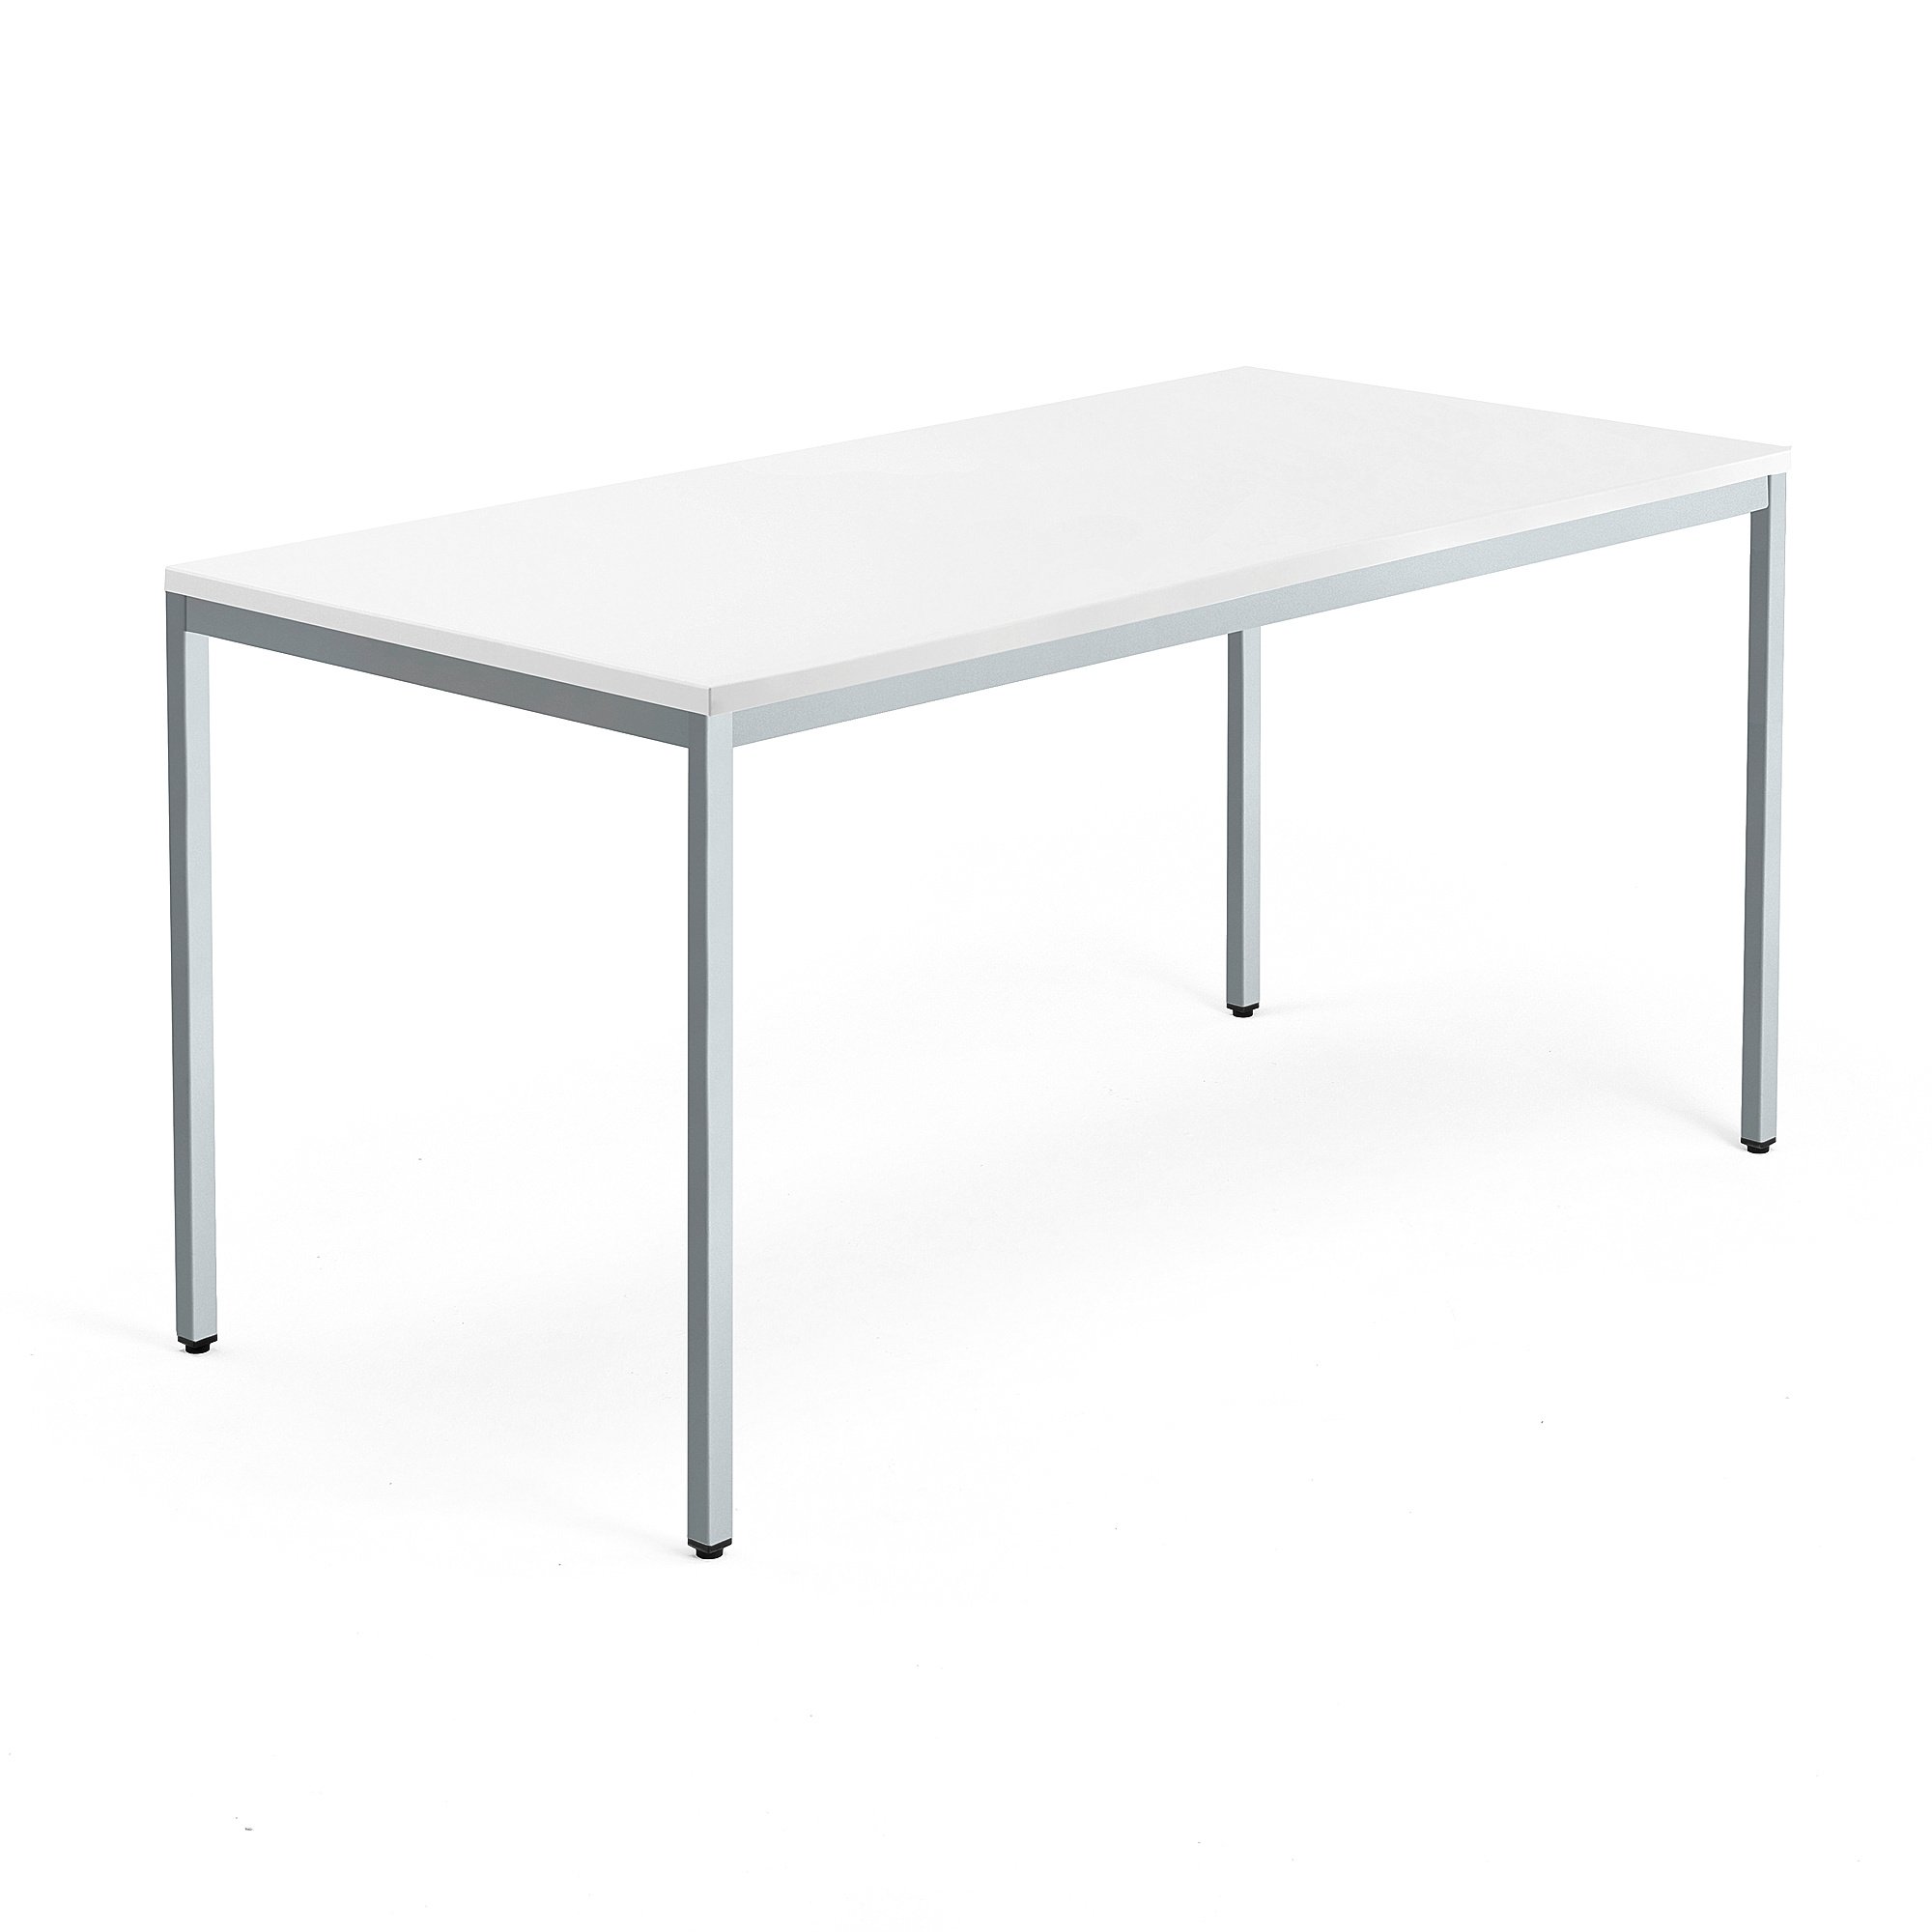 Jednací stůl QBUS, 4 nohy, 1600x800 mm, stříbrný rám, bílá